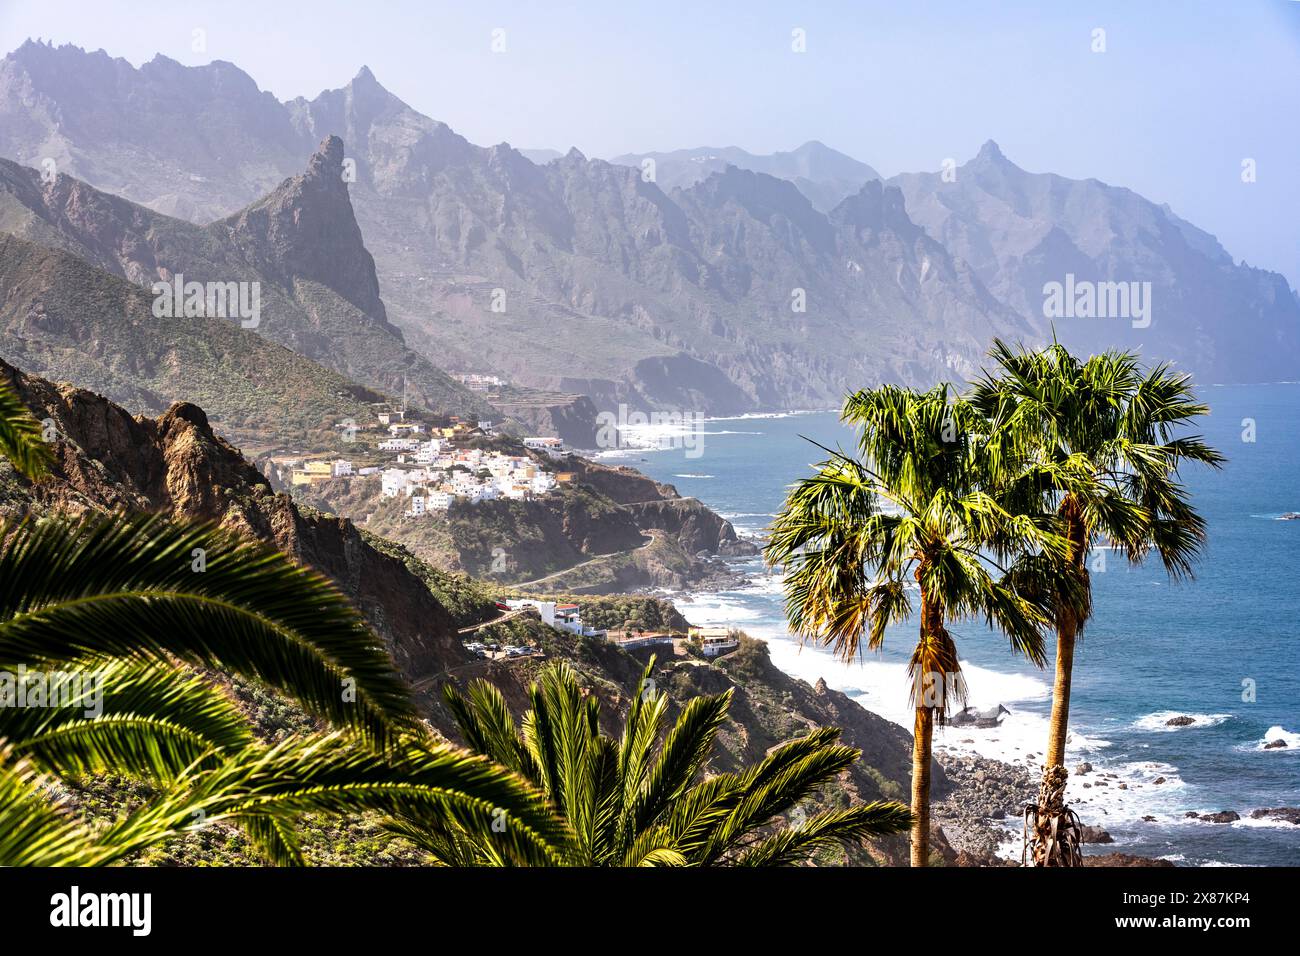 Spain, Canary Islands, Almaciga, Mountainous coastline of Tenerife island with village in background Stock Photo